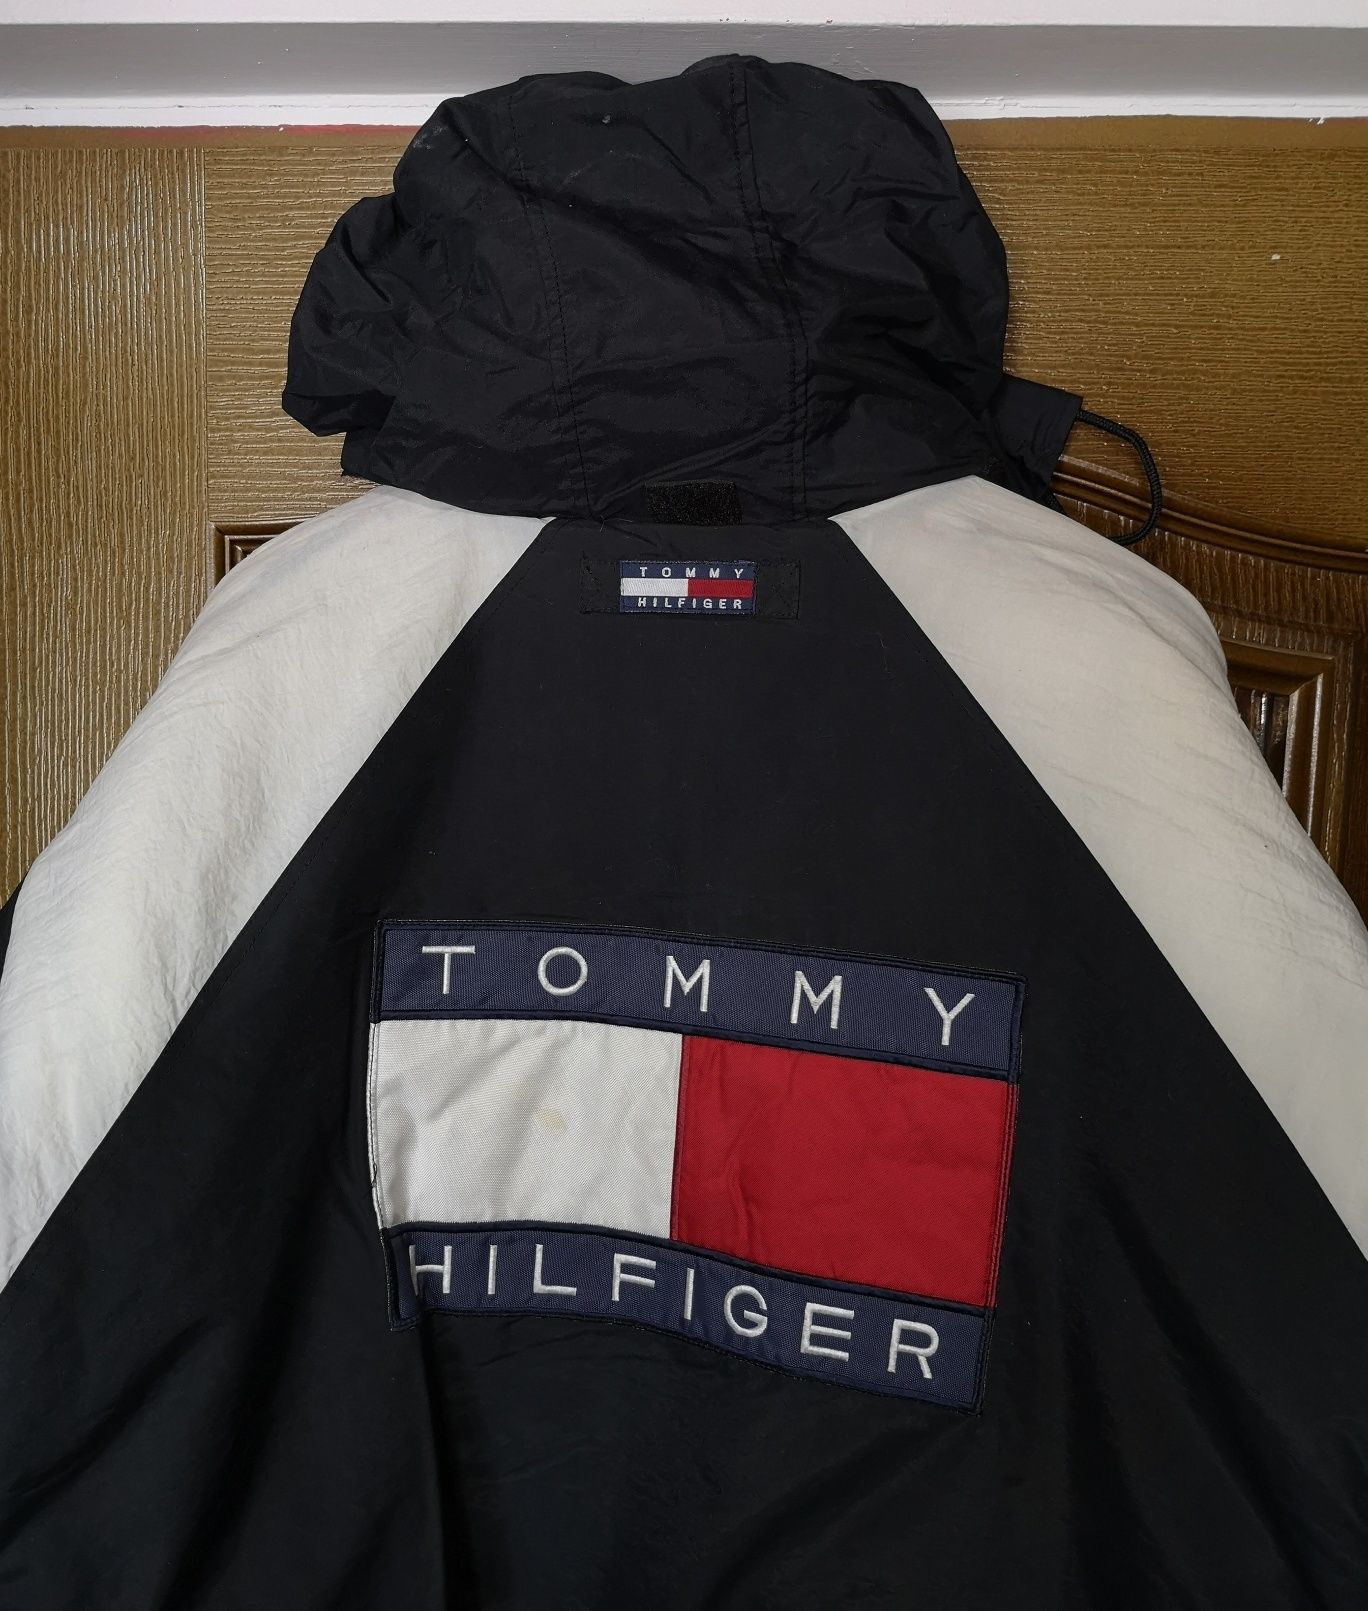 Tommy Hilfiger kurtka zimowa męska vintage retro 90's rare unikat